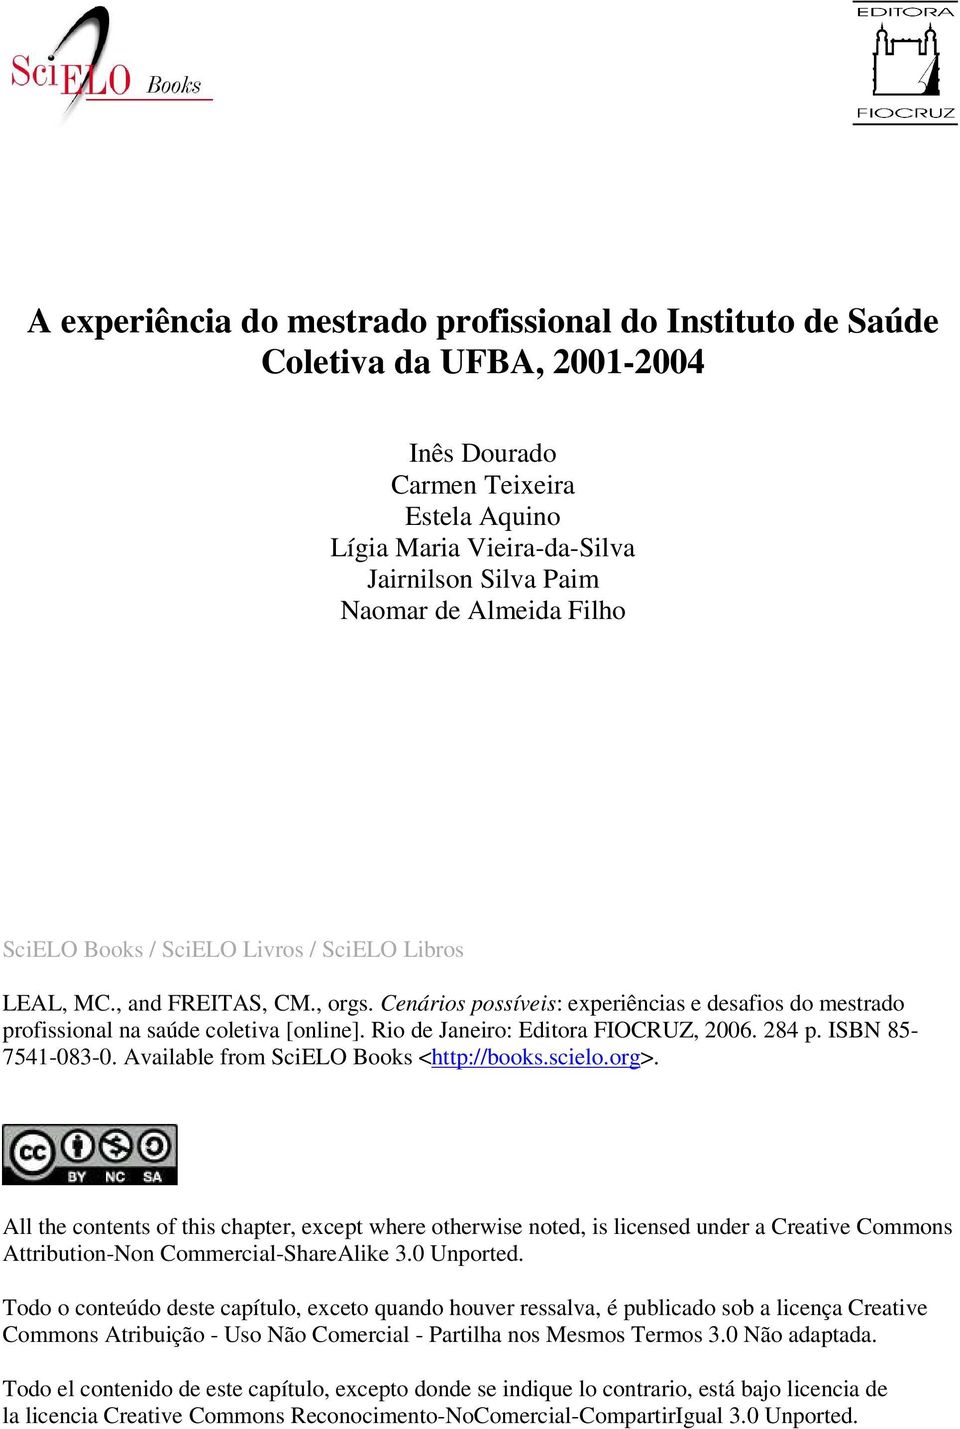 Rio de Janeiro: Editora FIOCRUZ, 2006. 284 p. ISBN 85-7541-083-0. Available from SciELO Books <http://books.scielo.org>.